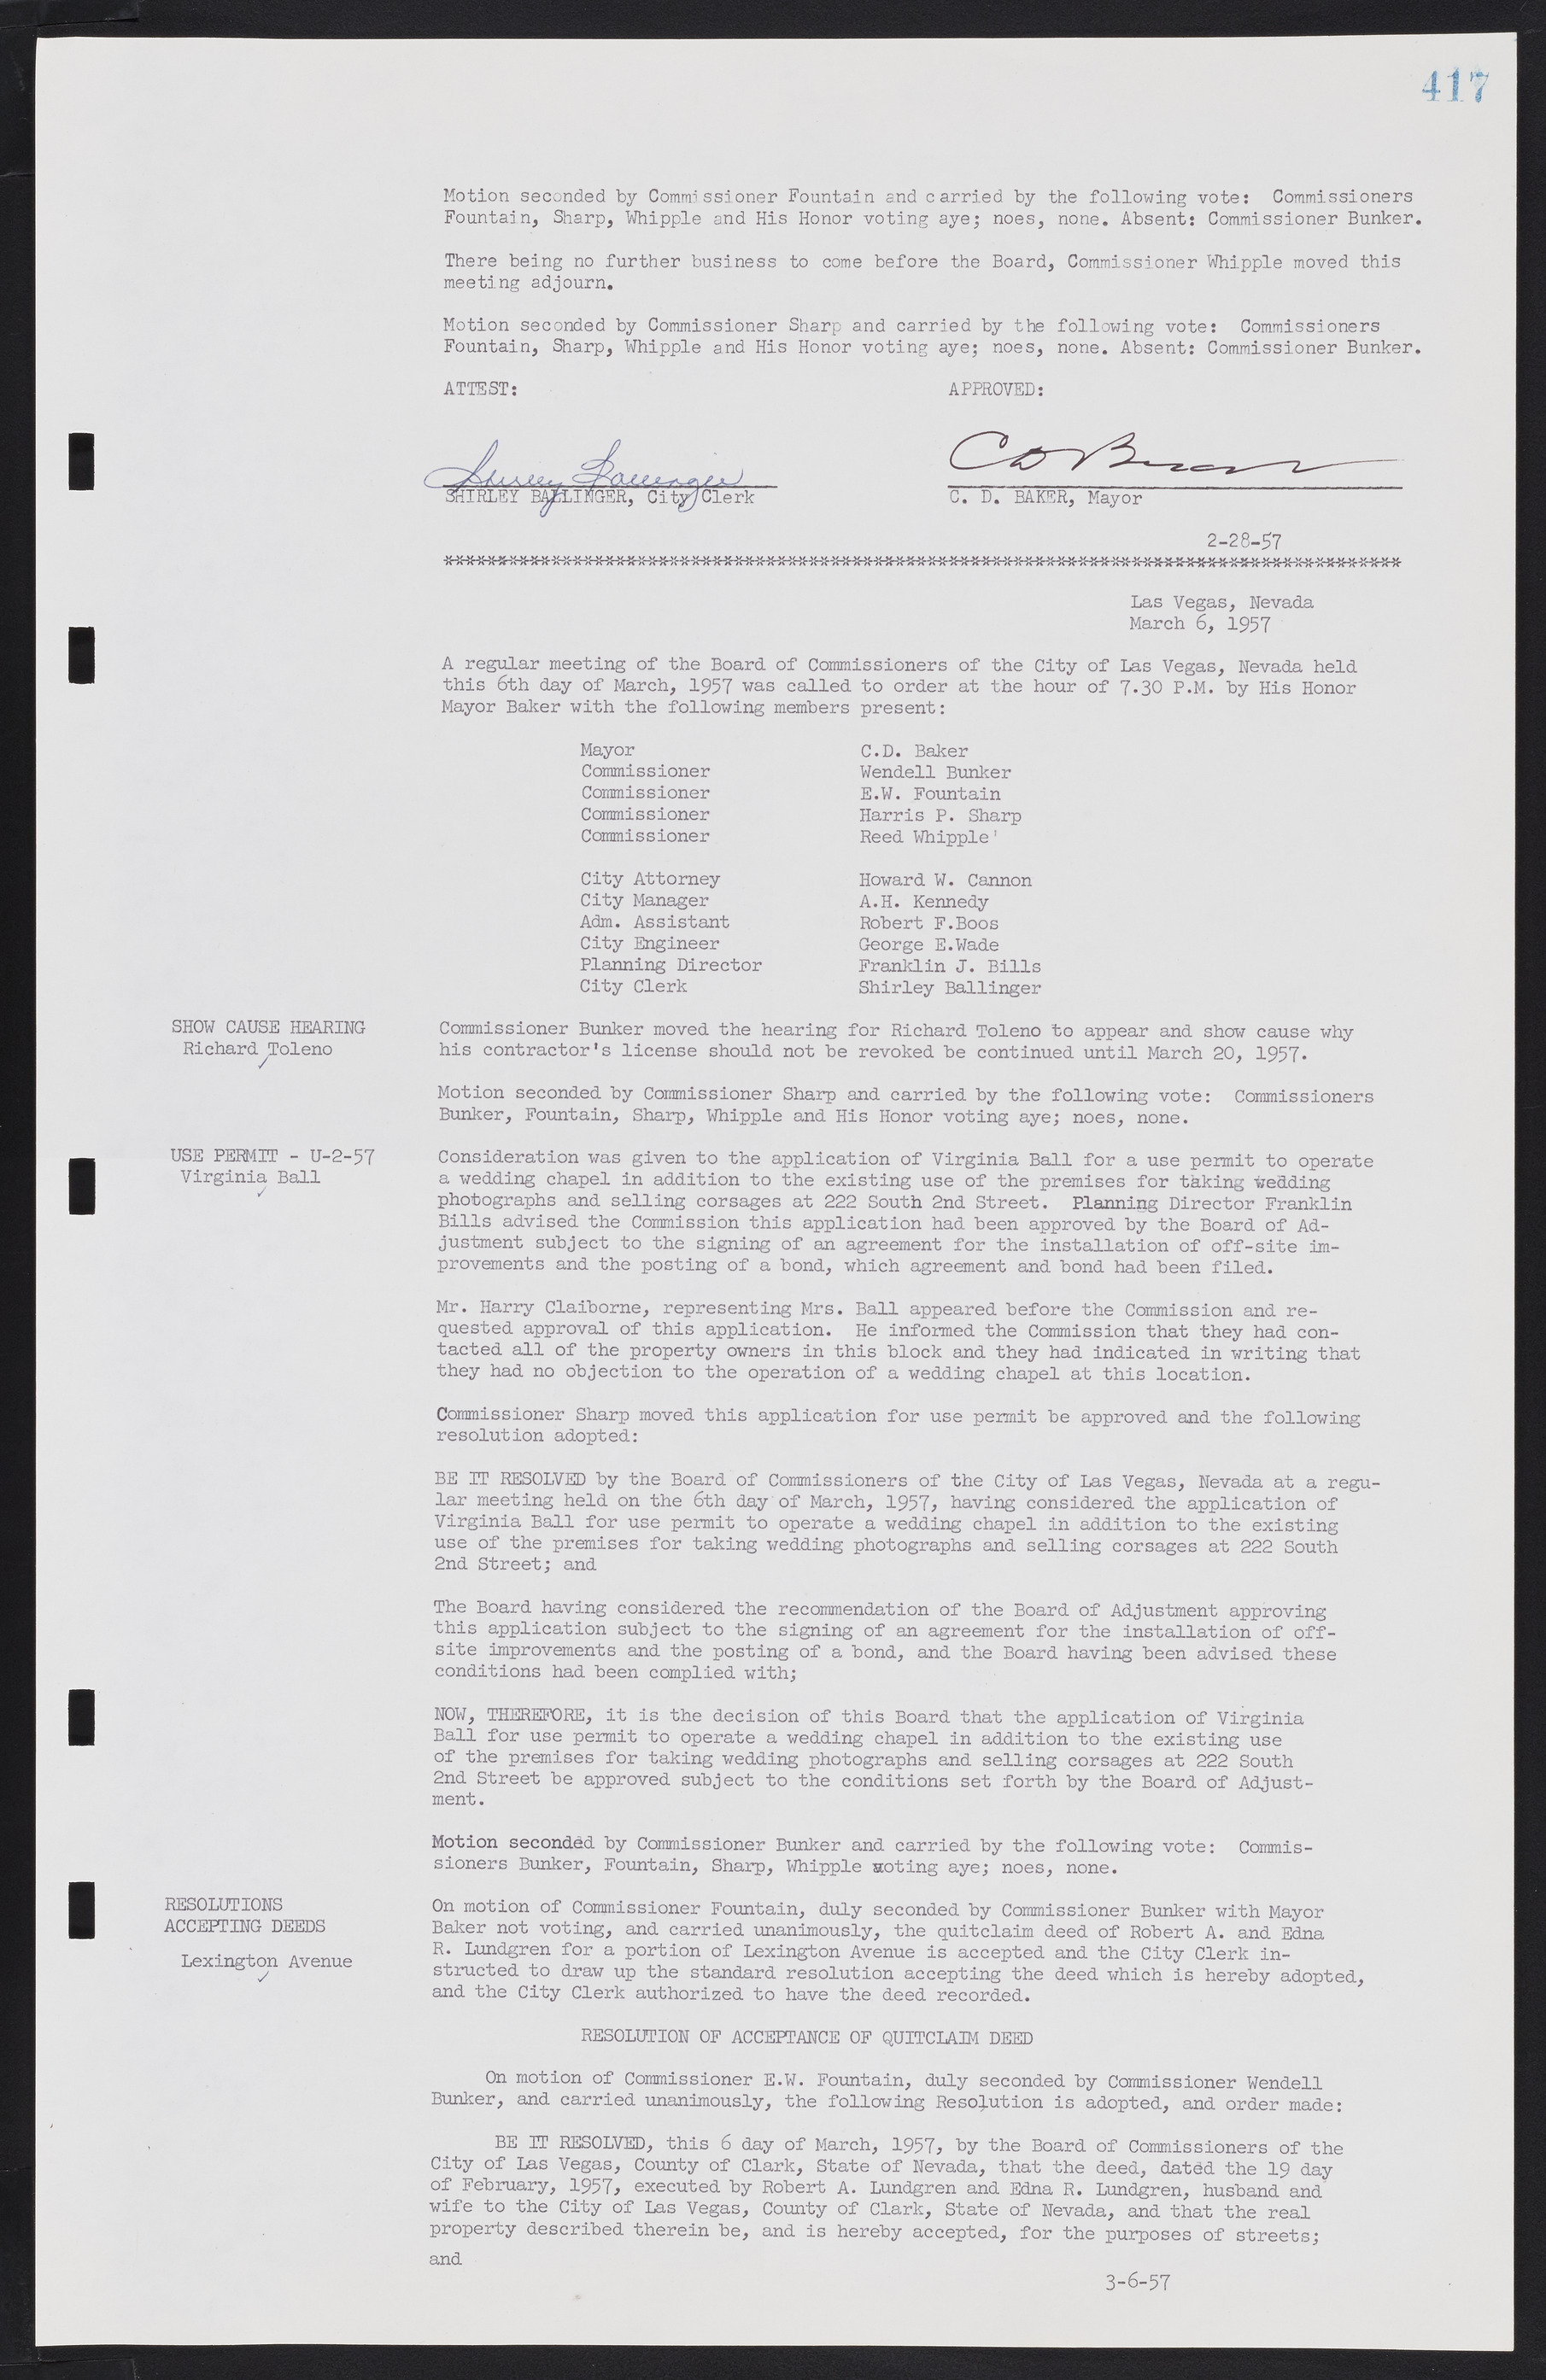 Las Vegas City Commission Minutes, September 21, 1955 to November 20, 1957, lvc000010-437